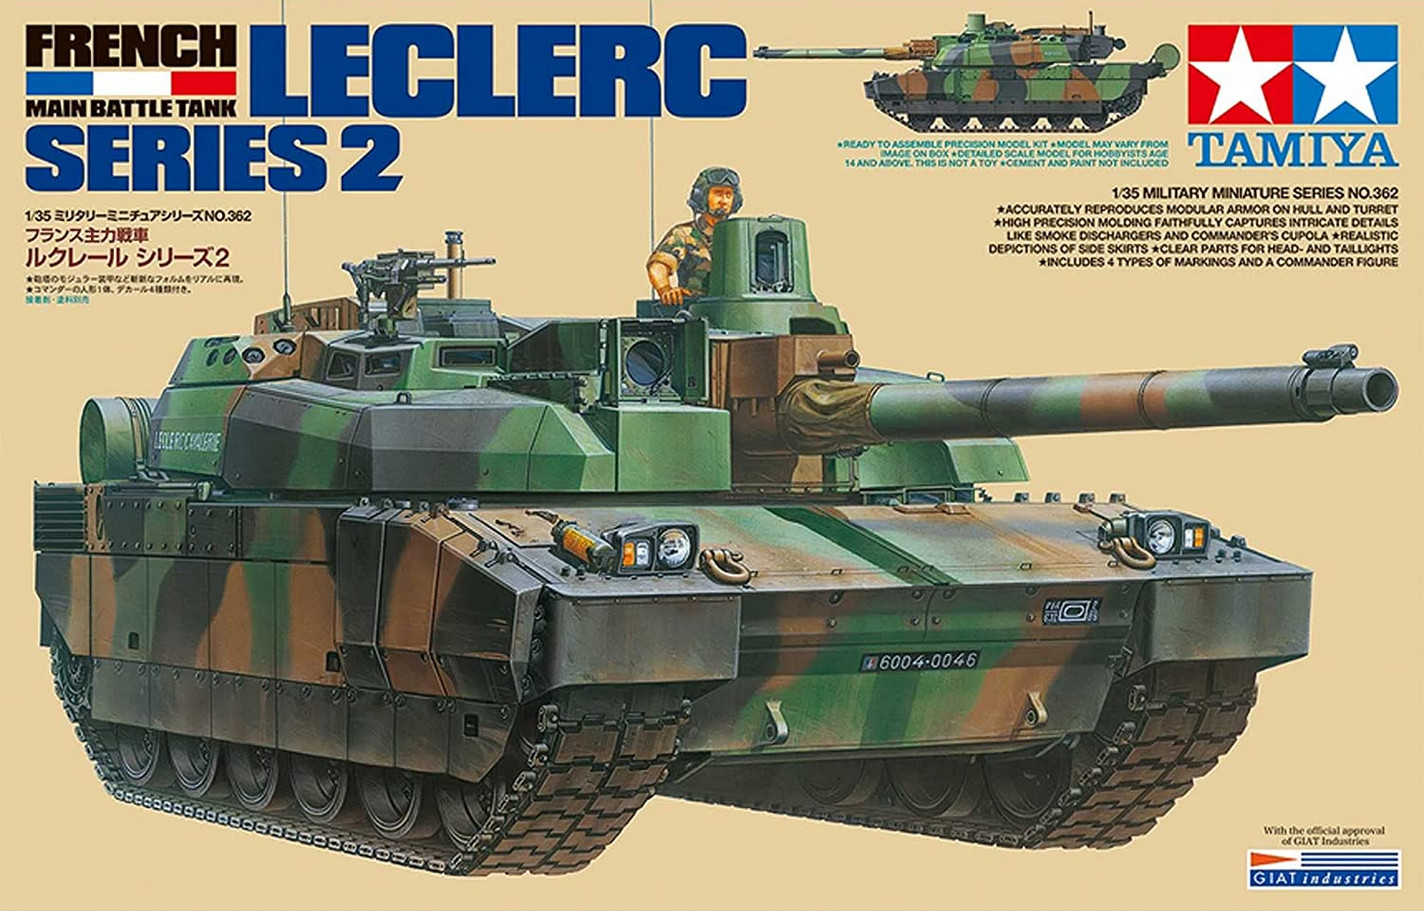 Leclerc Series 2 French Main Battle Tank - TAMIYA 1/35